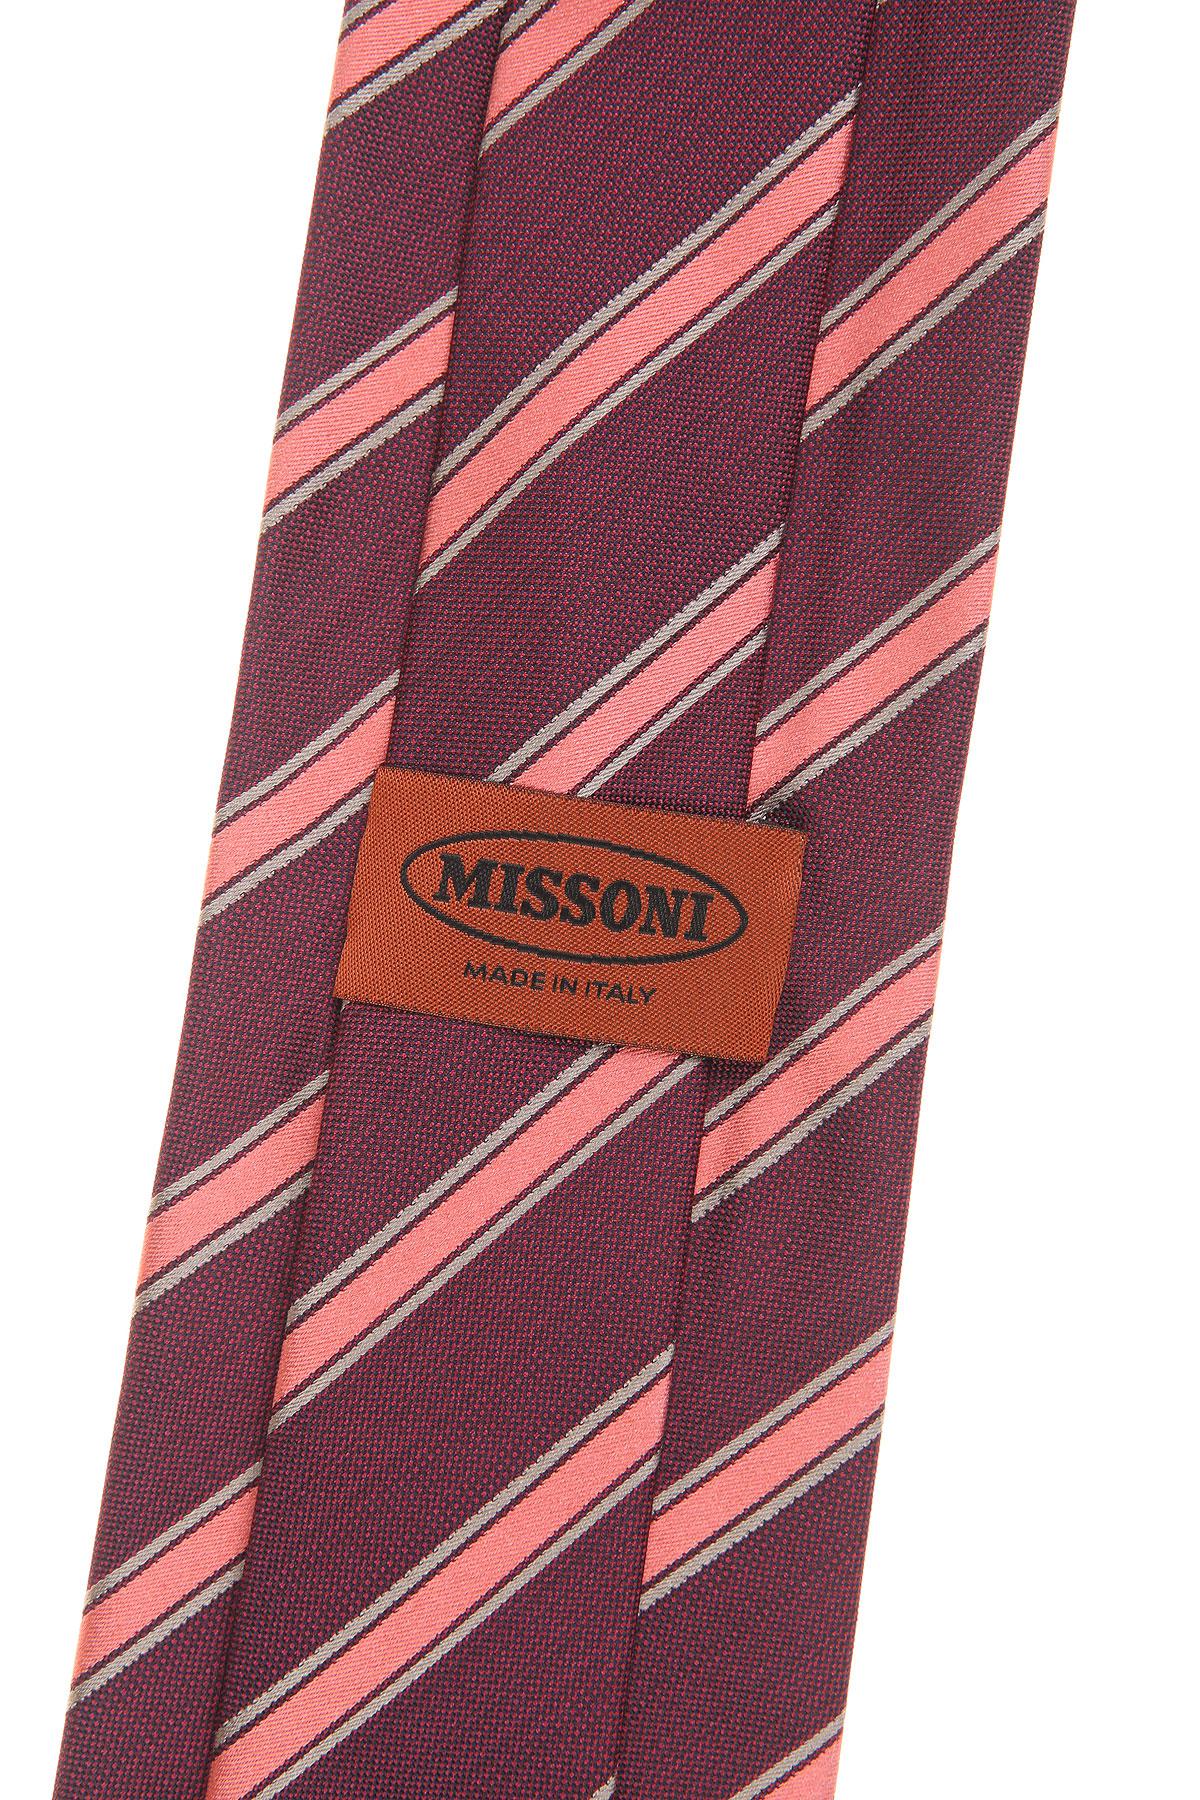 Missoni Silk Ties for Men - Save 2% - Lyst